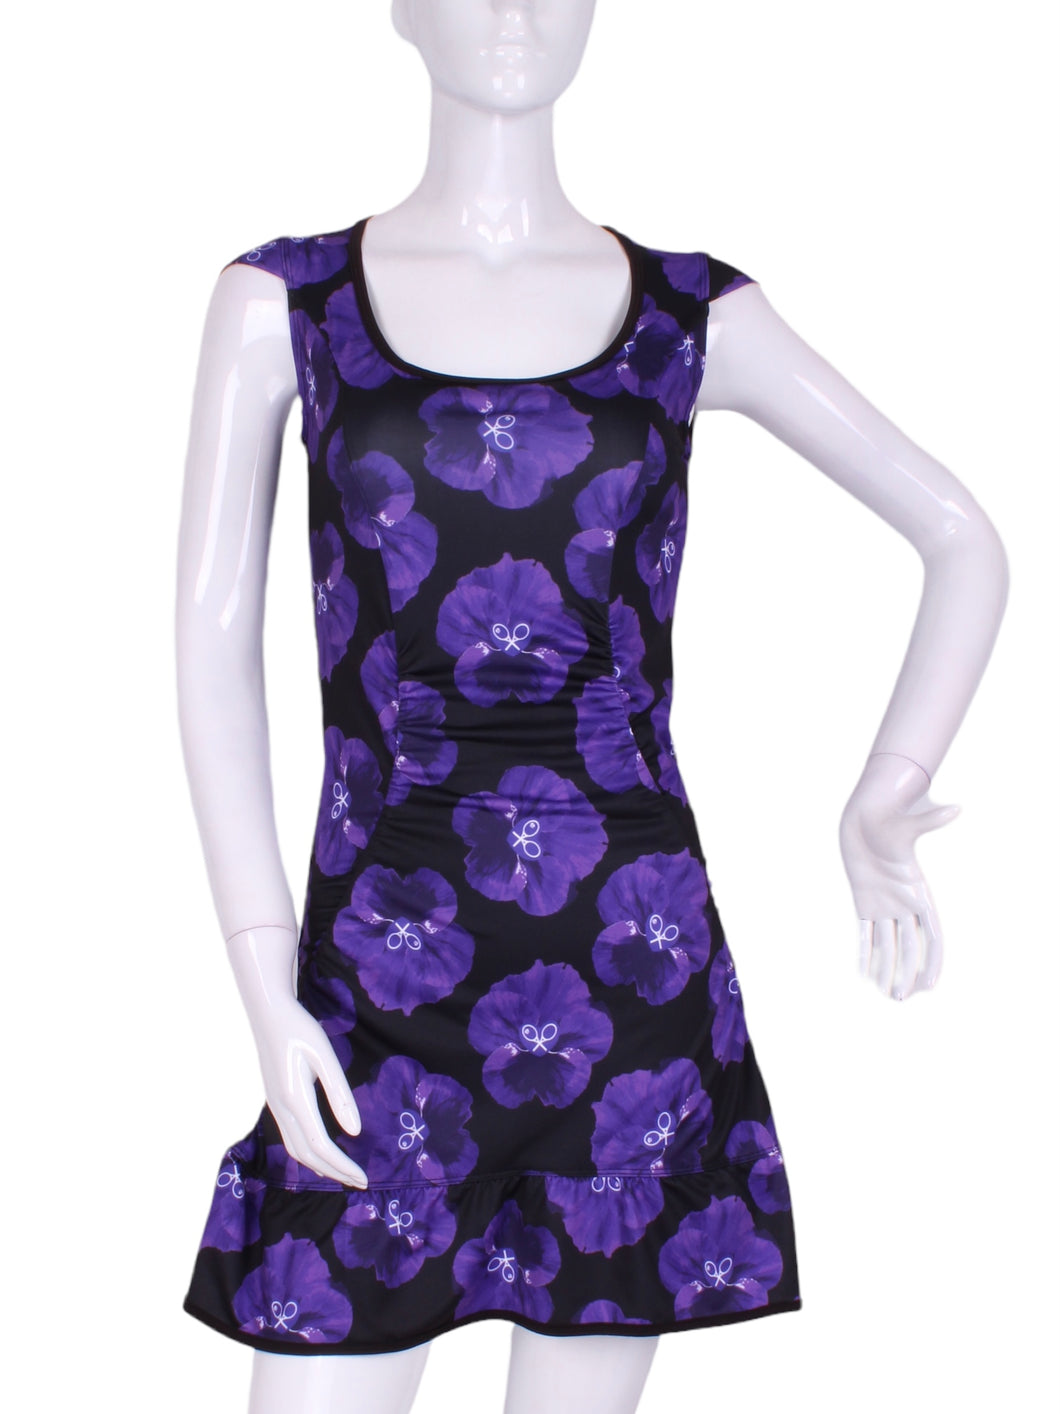 Purple Pansy Monroe Tennis Dress - I LOVE MY DOUBLES PARTNER!!!